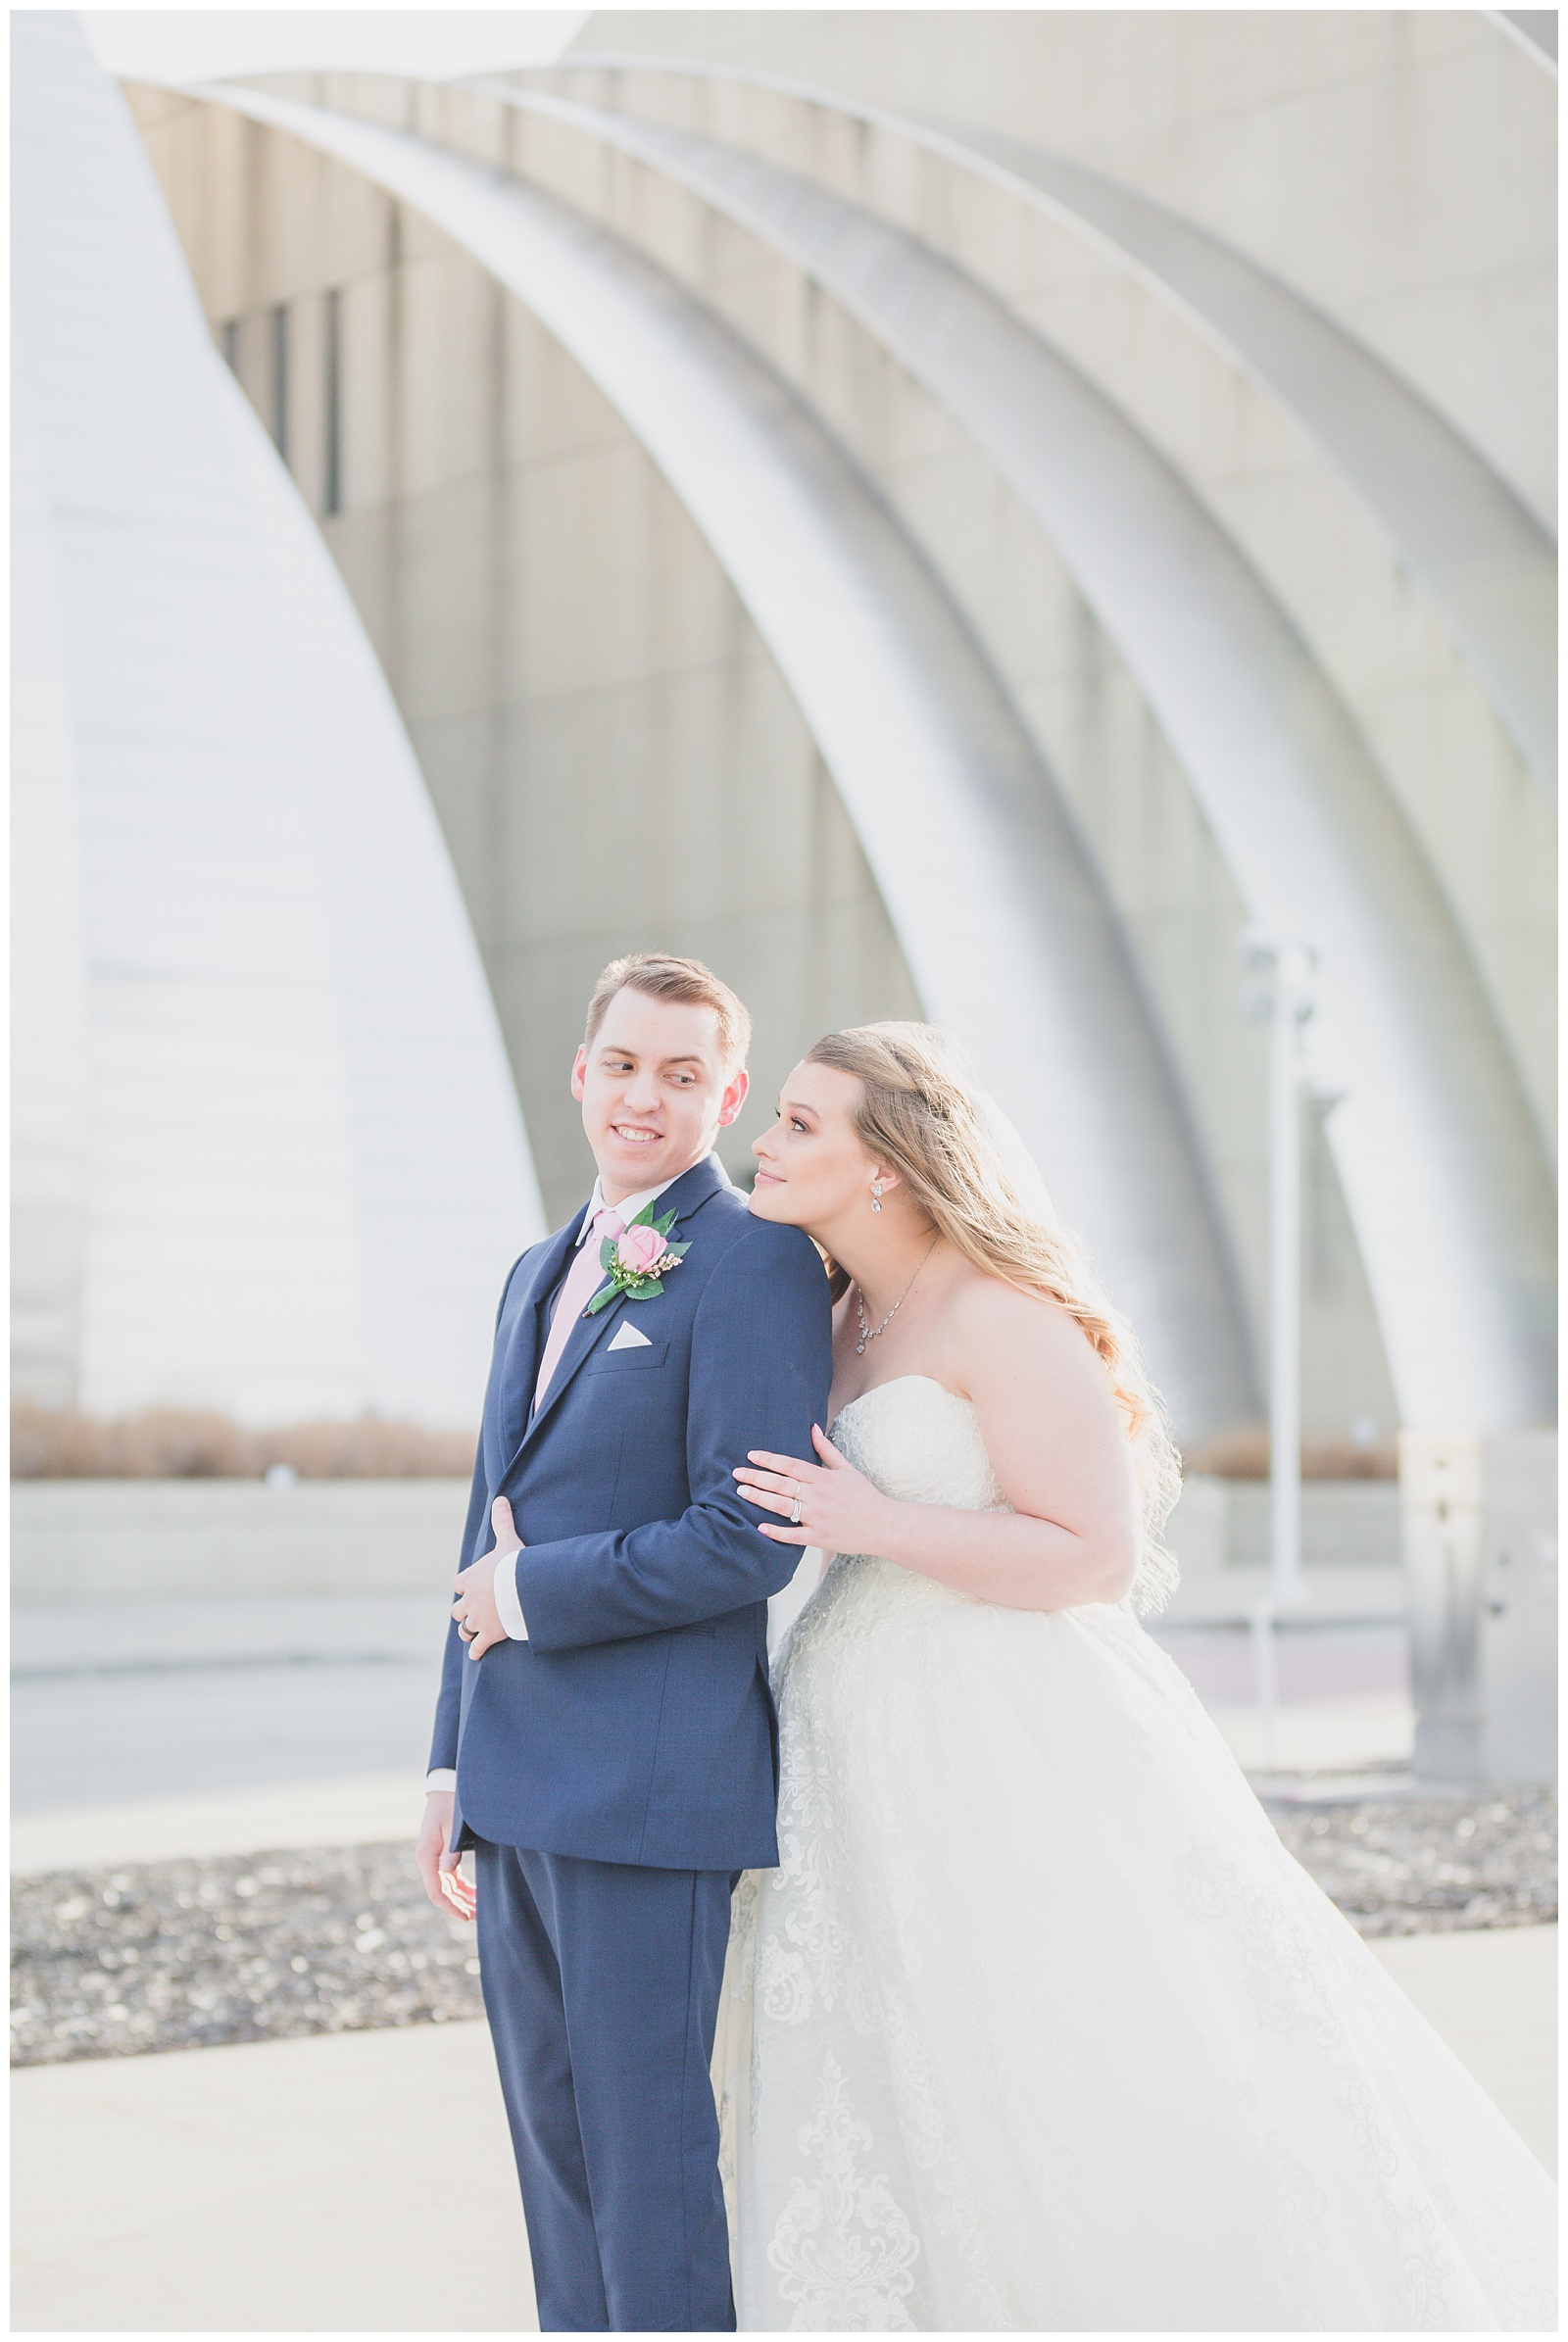 Wedding photography at the Kauffman Center for Performing Arts by Kansas City wedding photographers Wisdom-Watson Weddings.